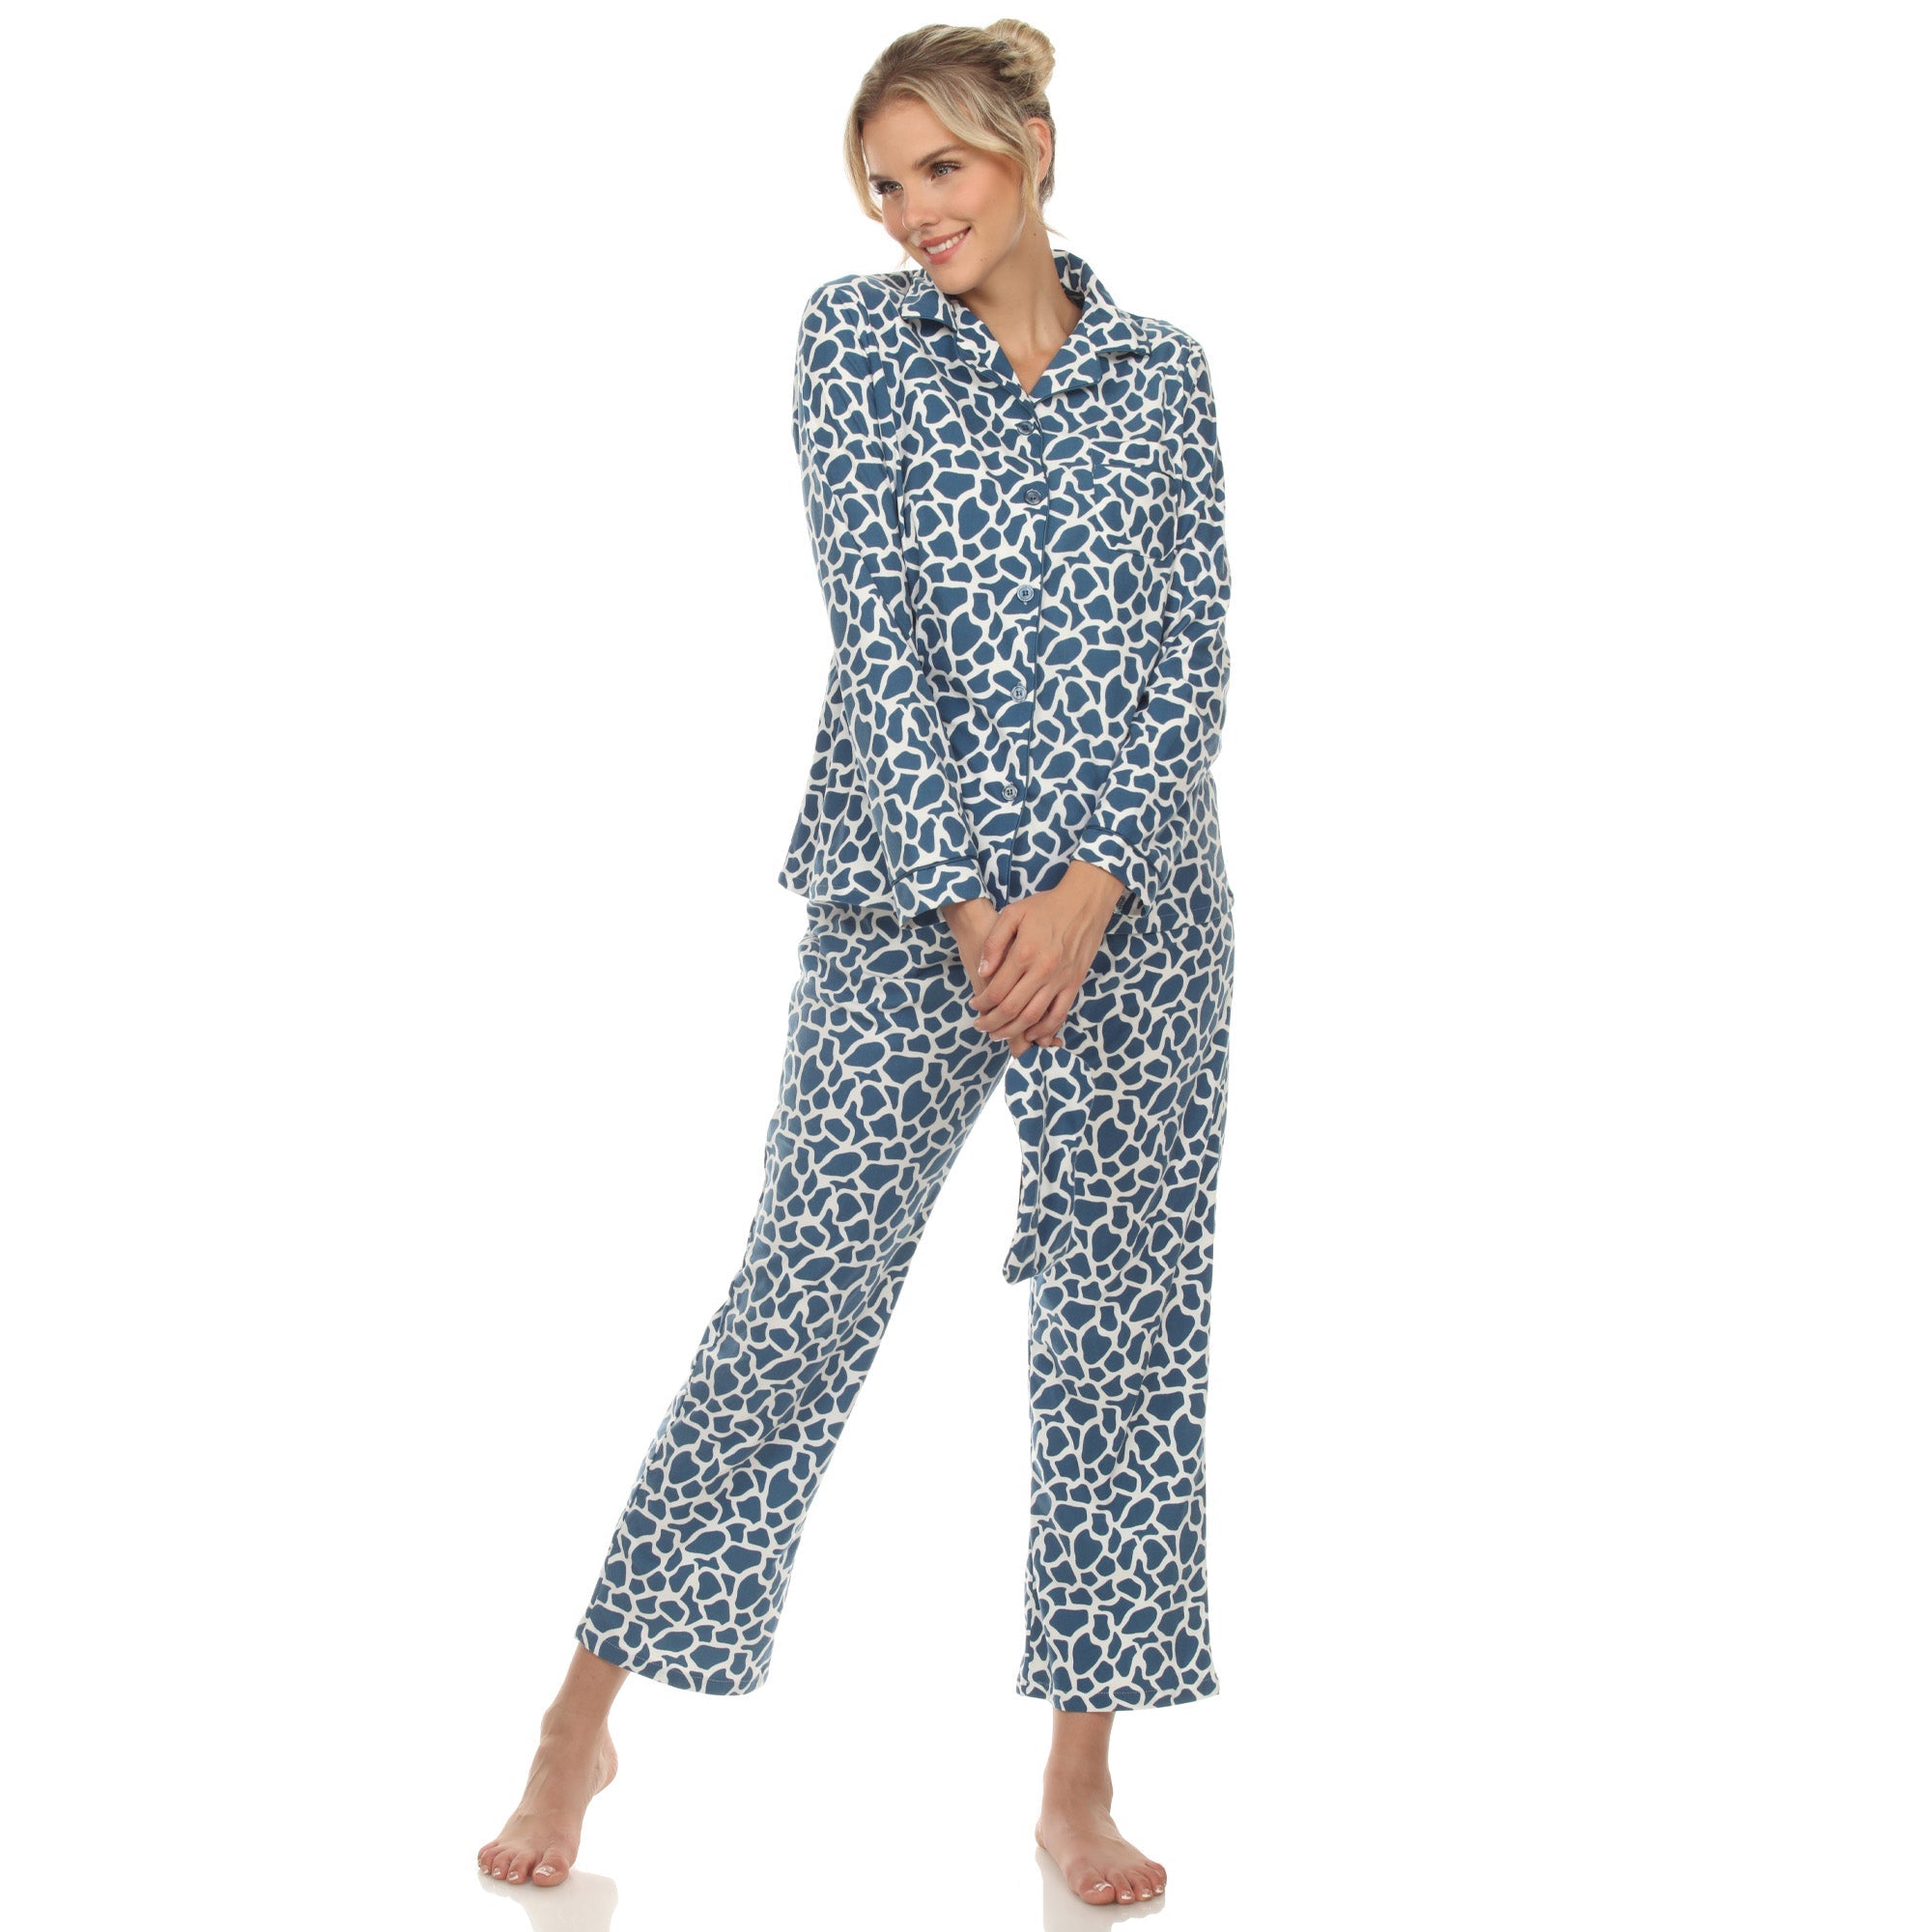 Shop Fashion Women's Pajamas 3 Pieces/lot Women Pajamas Sets